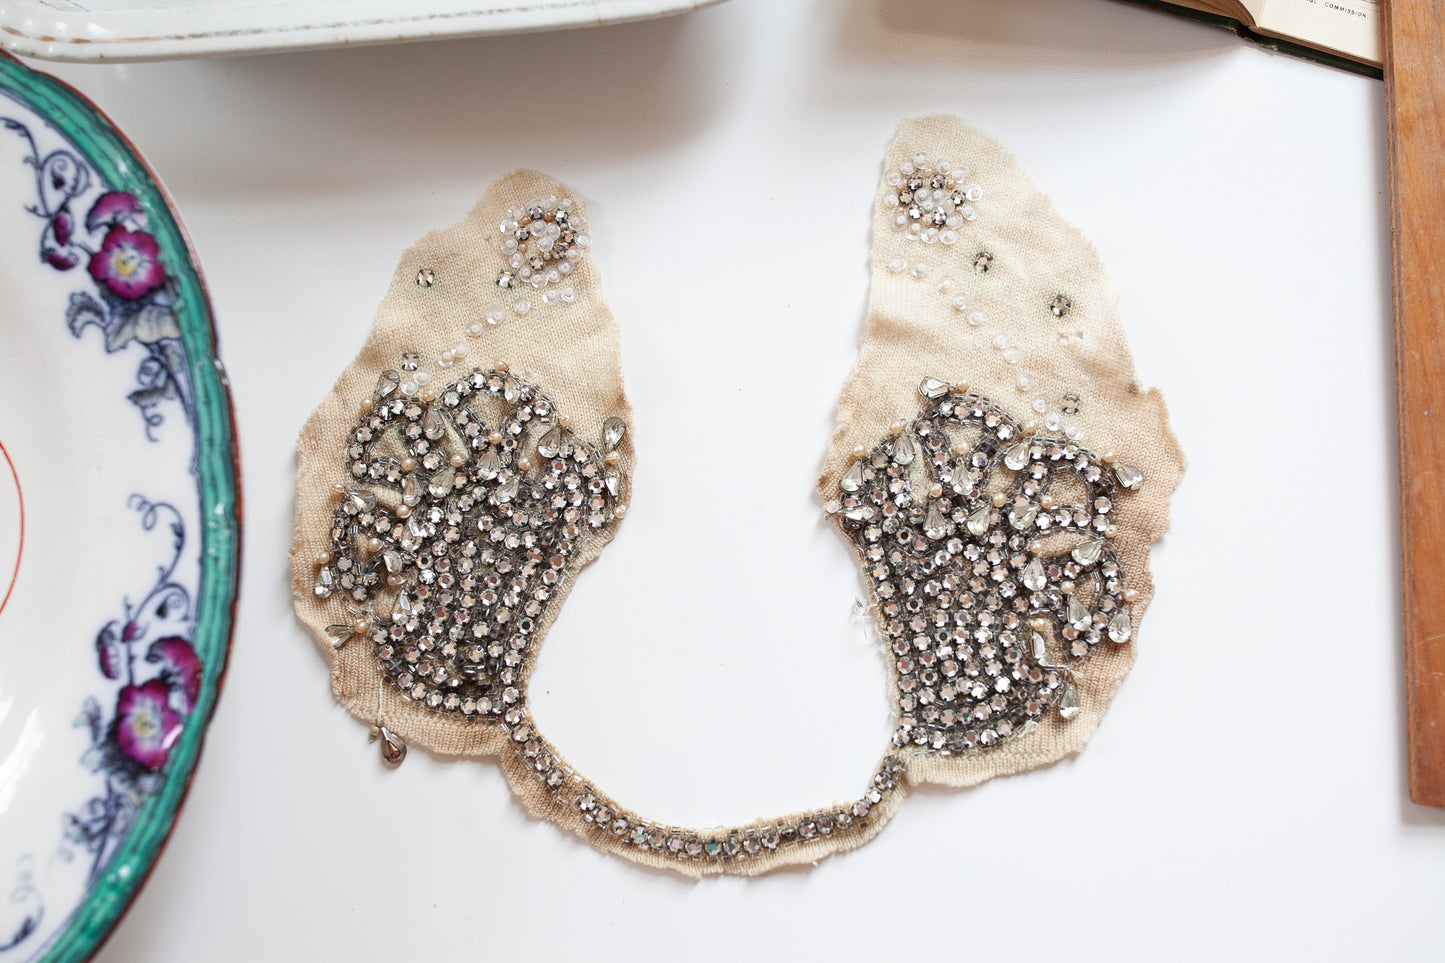 Vintage Beadwork - Collar Bead Work and Sequins